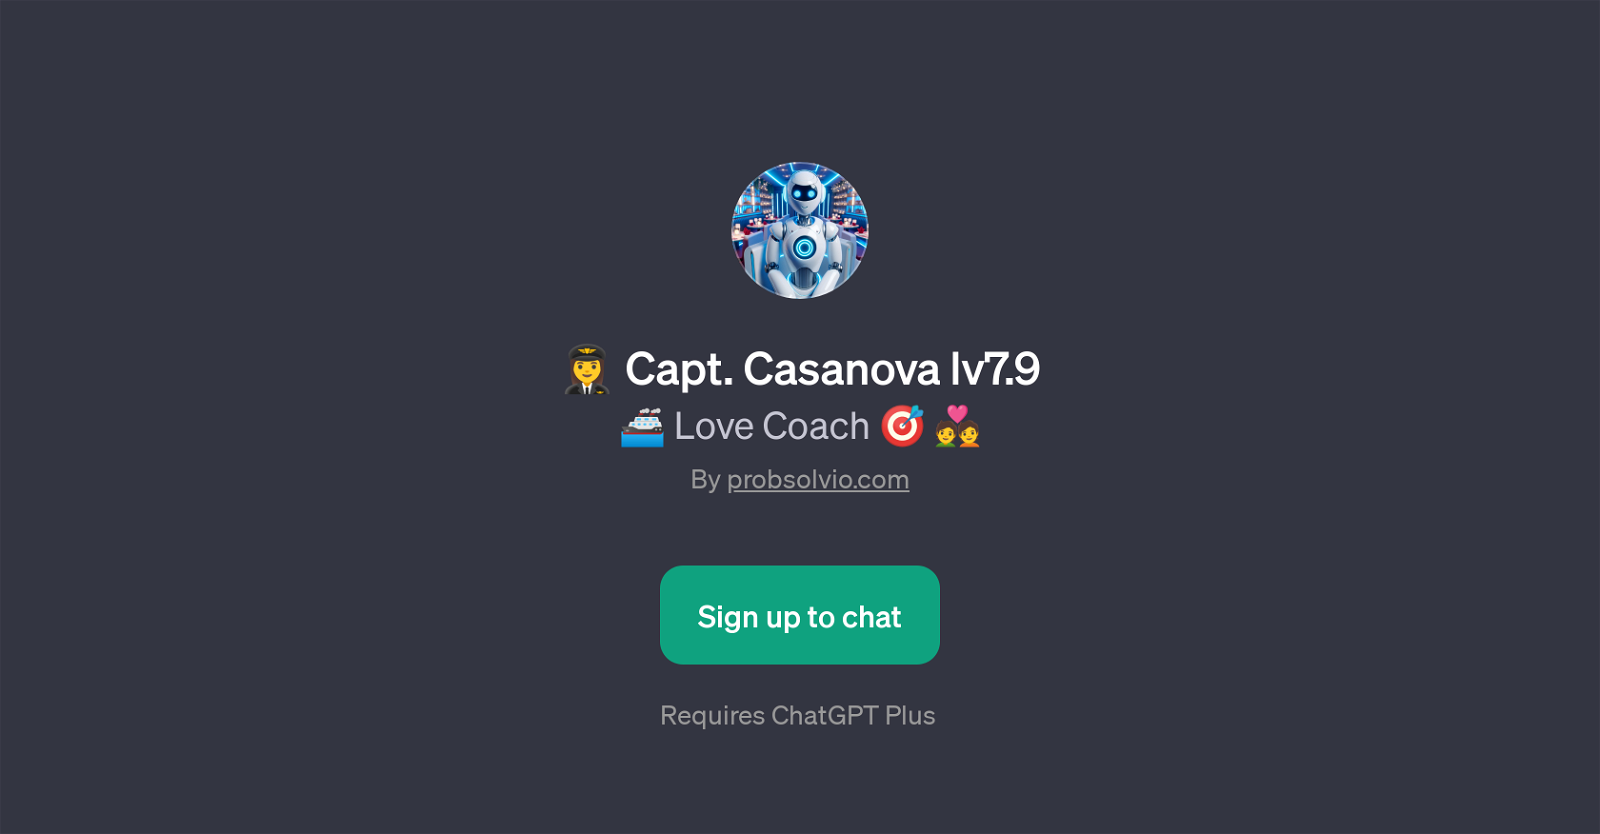 Capt. Casanova lv7.9 website